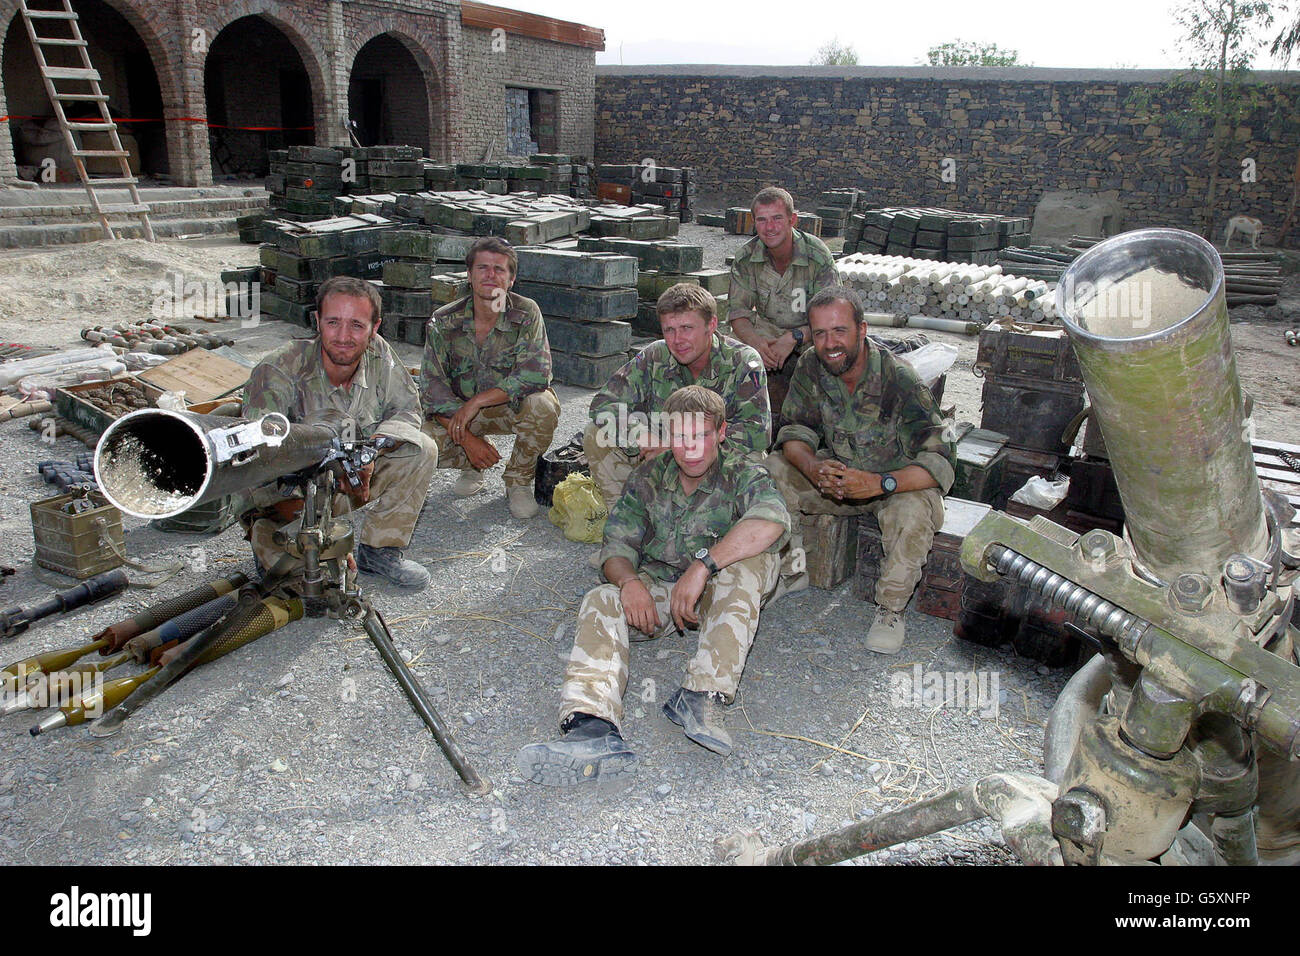 Afganistán armas encontradas Foto de stock